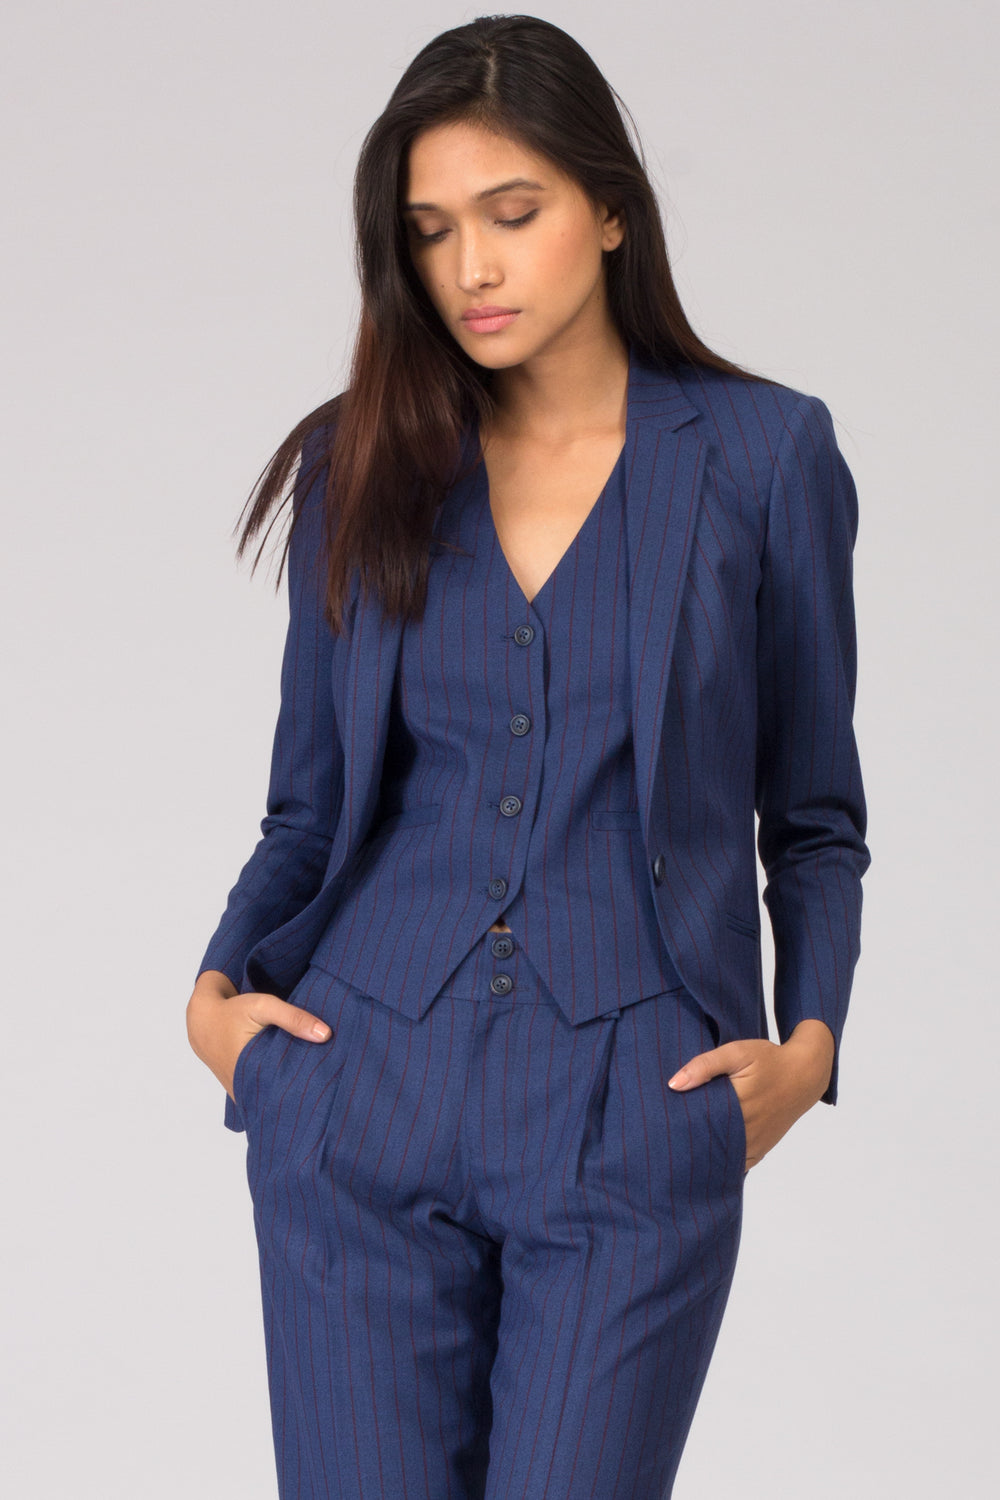 Buy Navy Blue Ladies Pant Suit Online In India  Etsy India